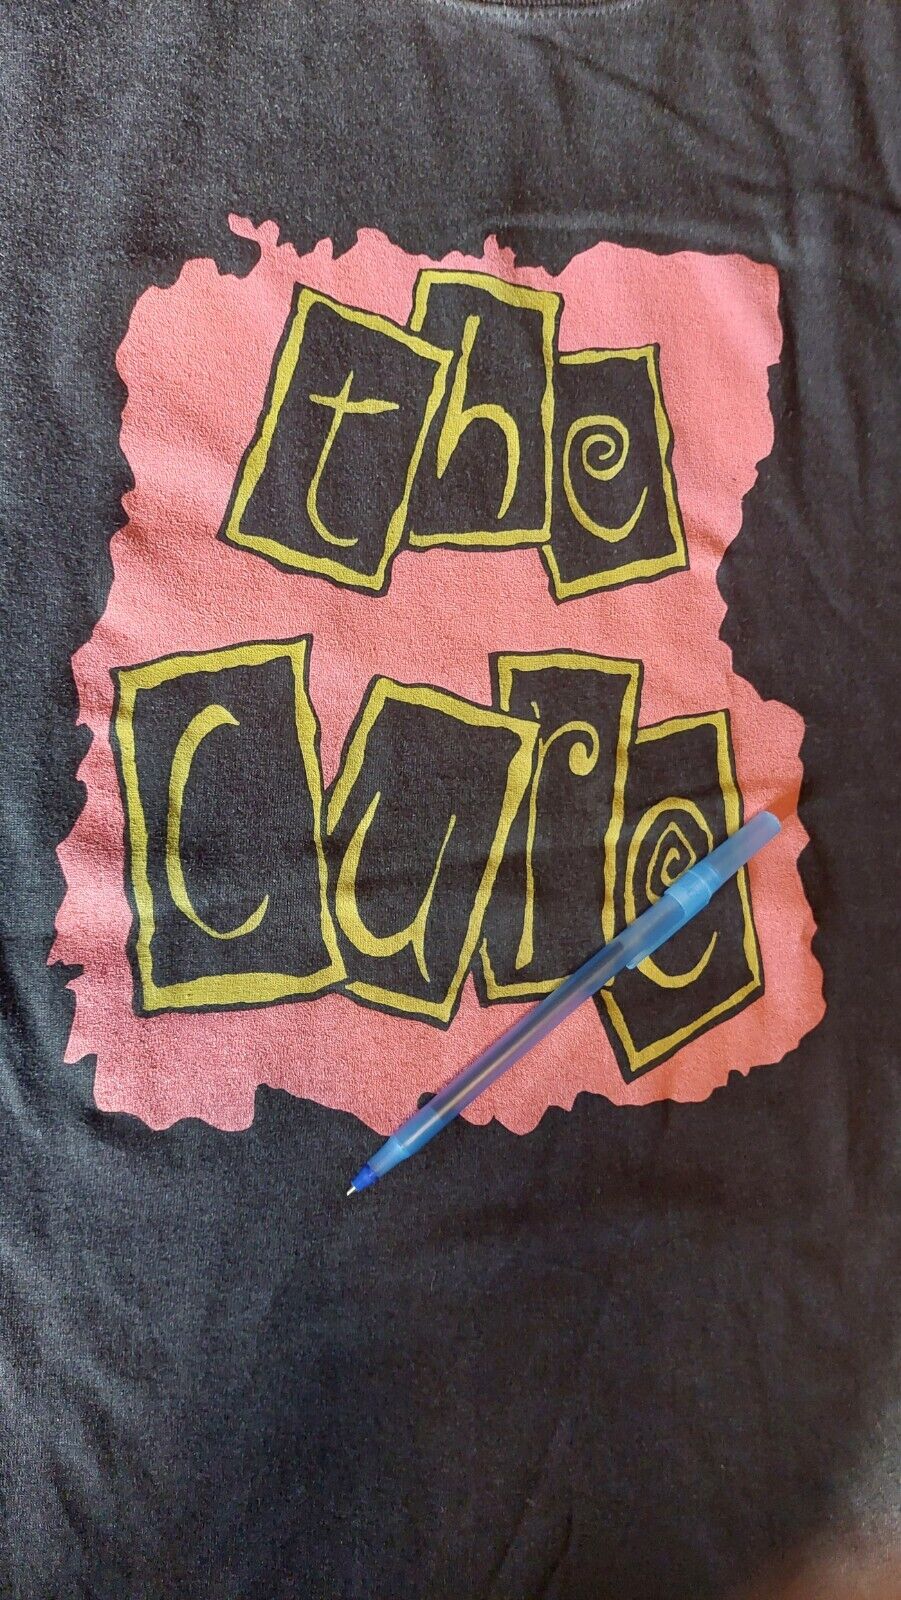 The Cure Rock Band Shirt Robert Smith Morrisey Smiths Alternative Goth Rare